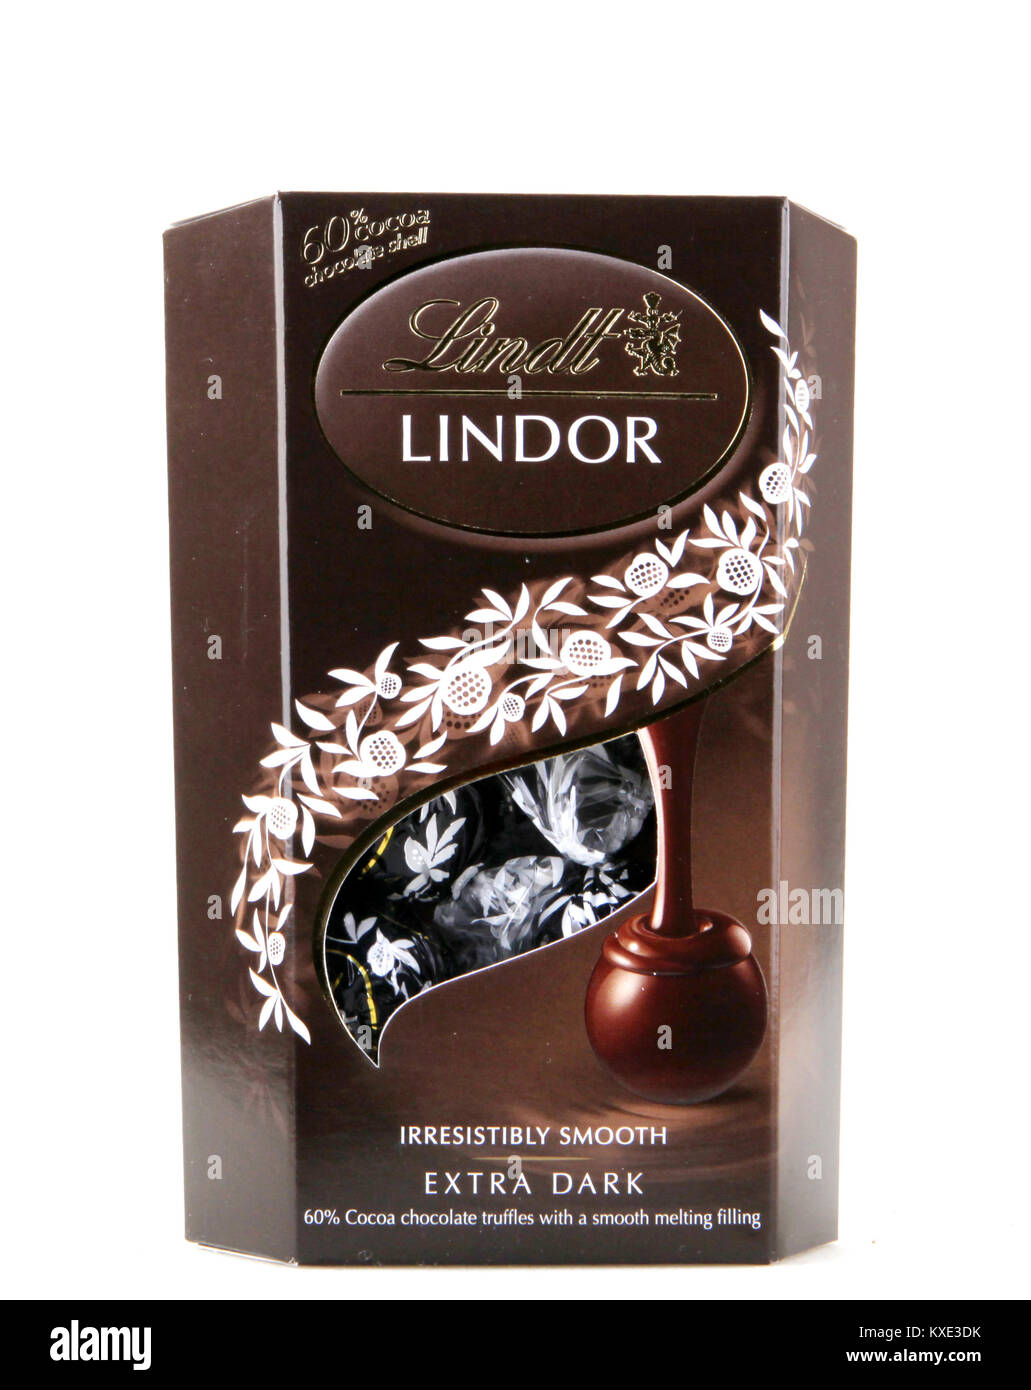 Pomorie, Bulgaria - January 09, 2018: A box of Lindt Lindor chocolate truffles. Chocoladefabriken Lindt & Sprüngli AG is a Swiss chocolatier and confe Stock Photo